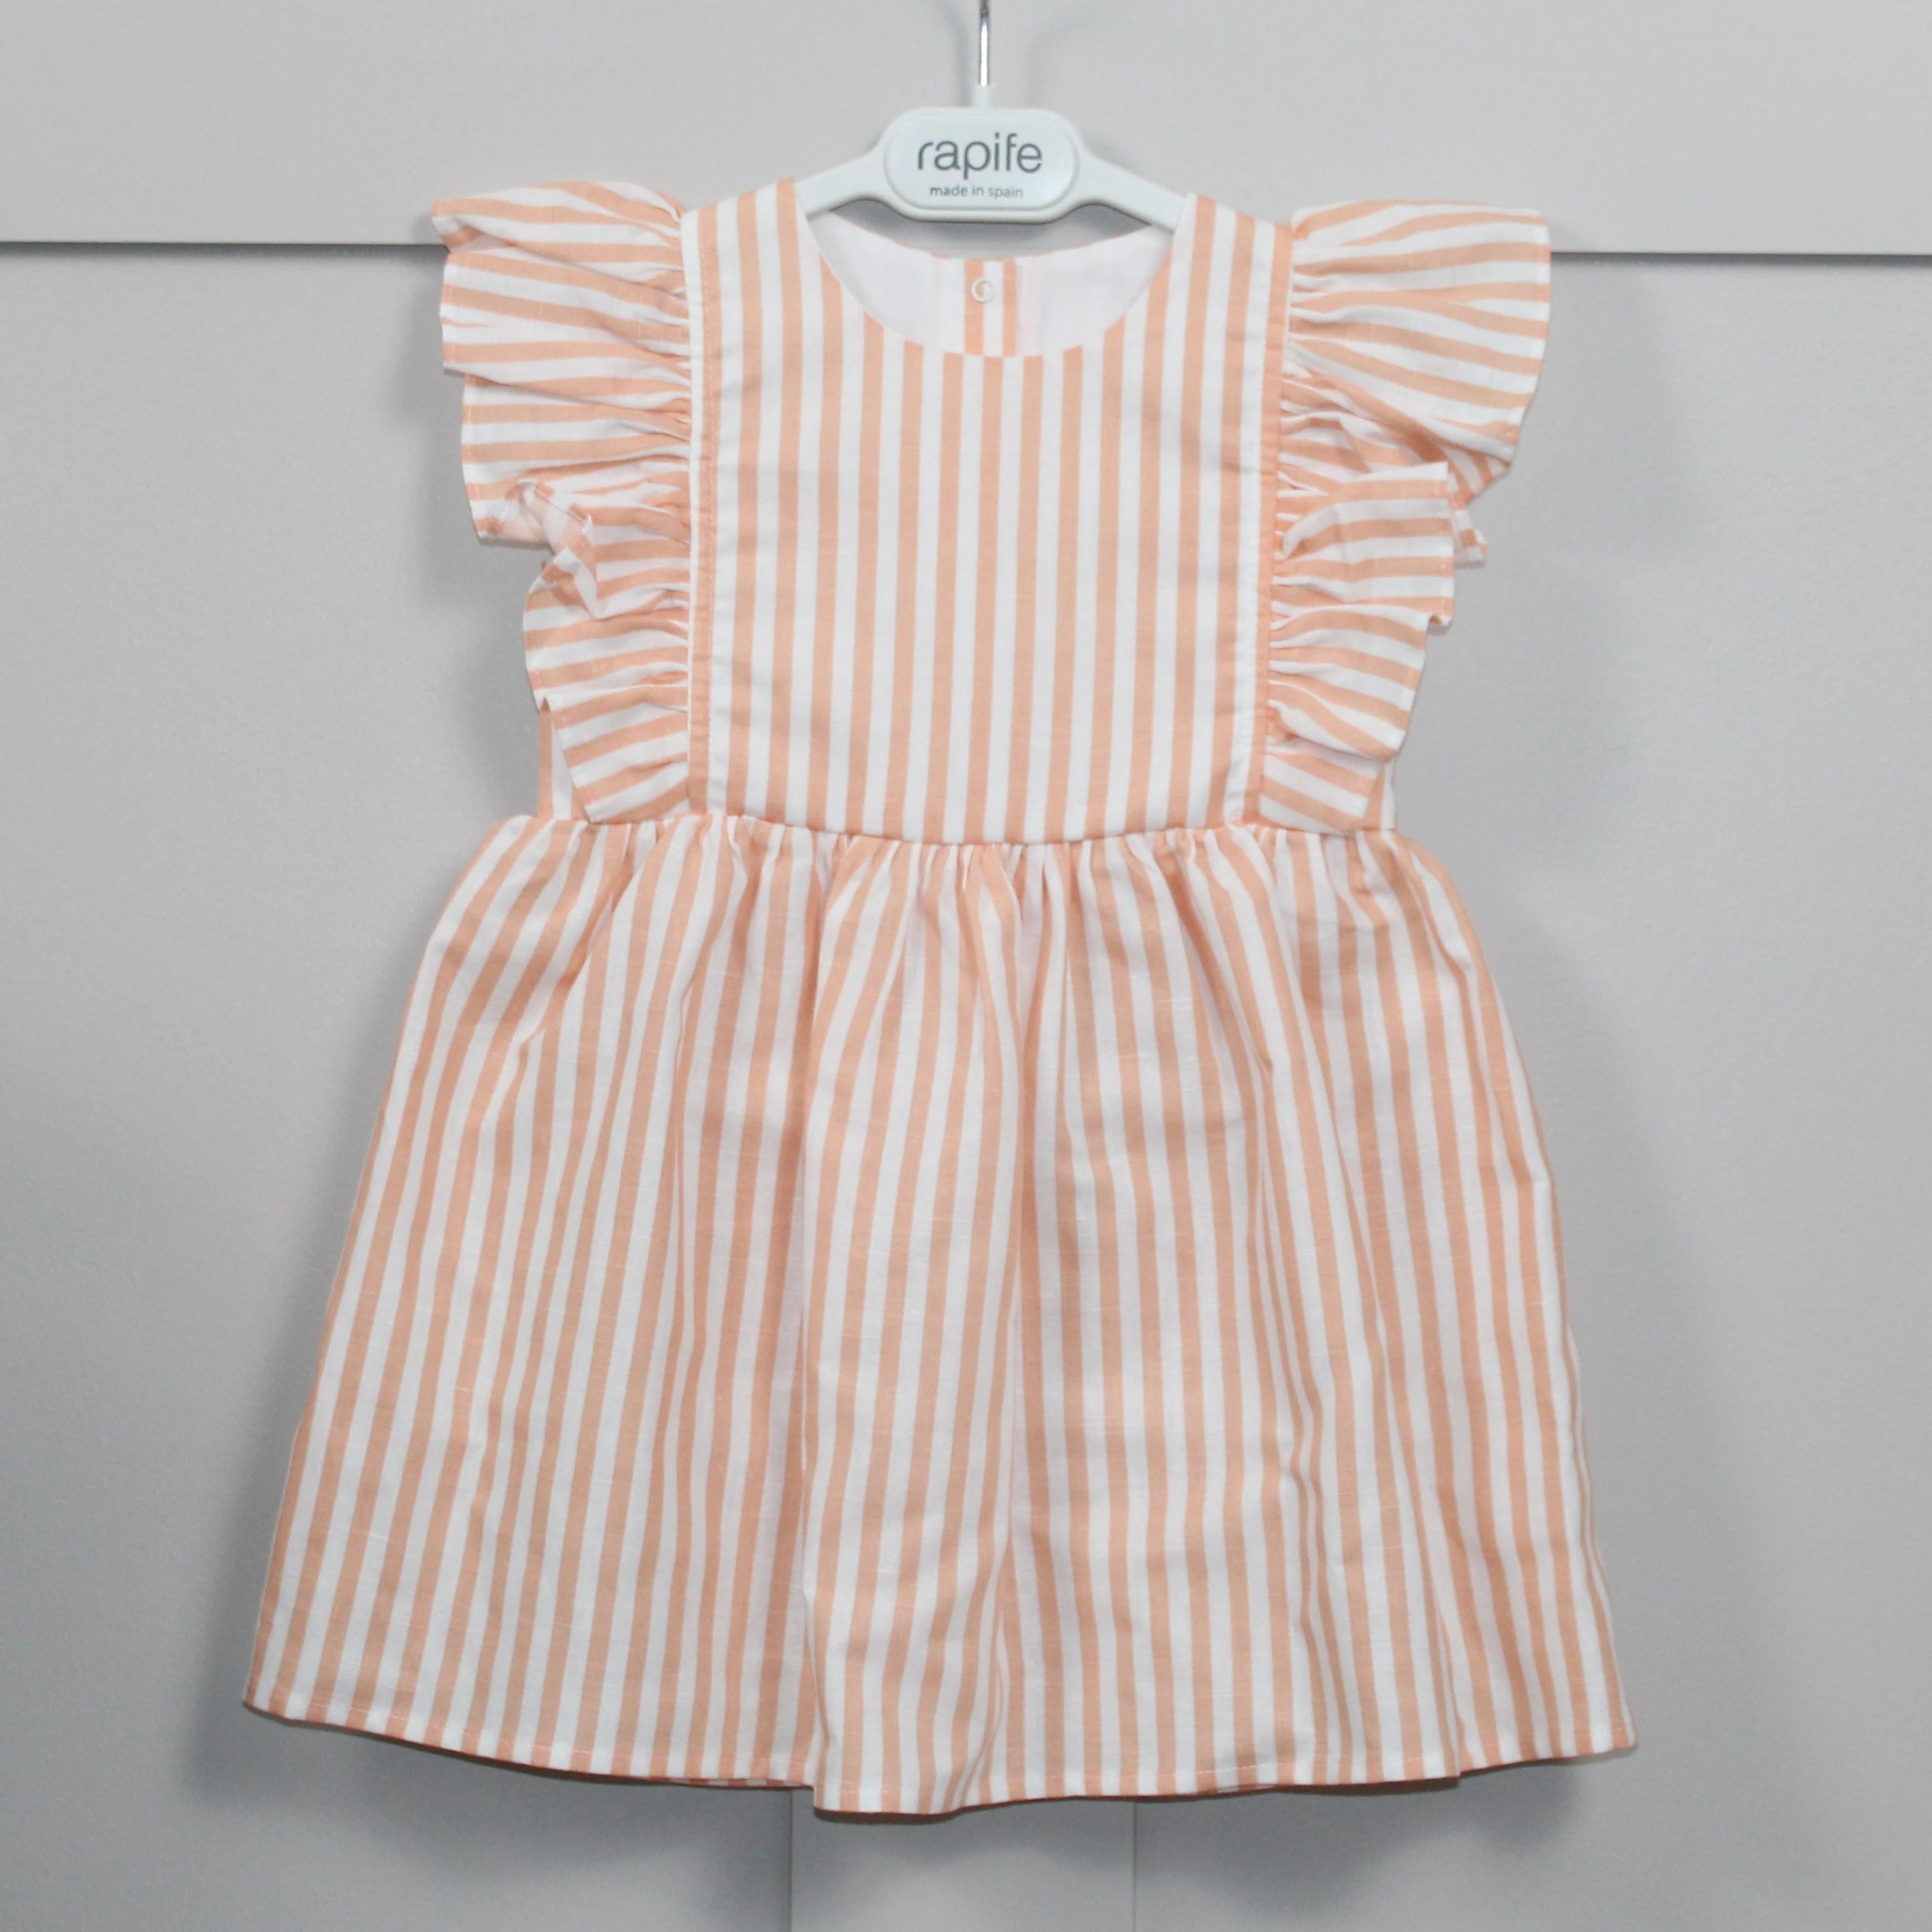 Rapife Orange Striped Sleeveless Dress